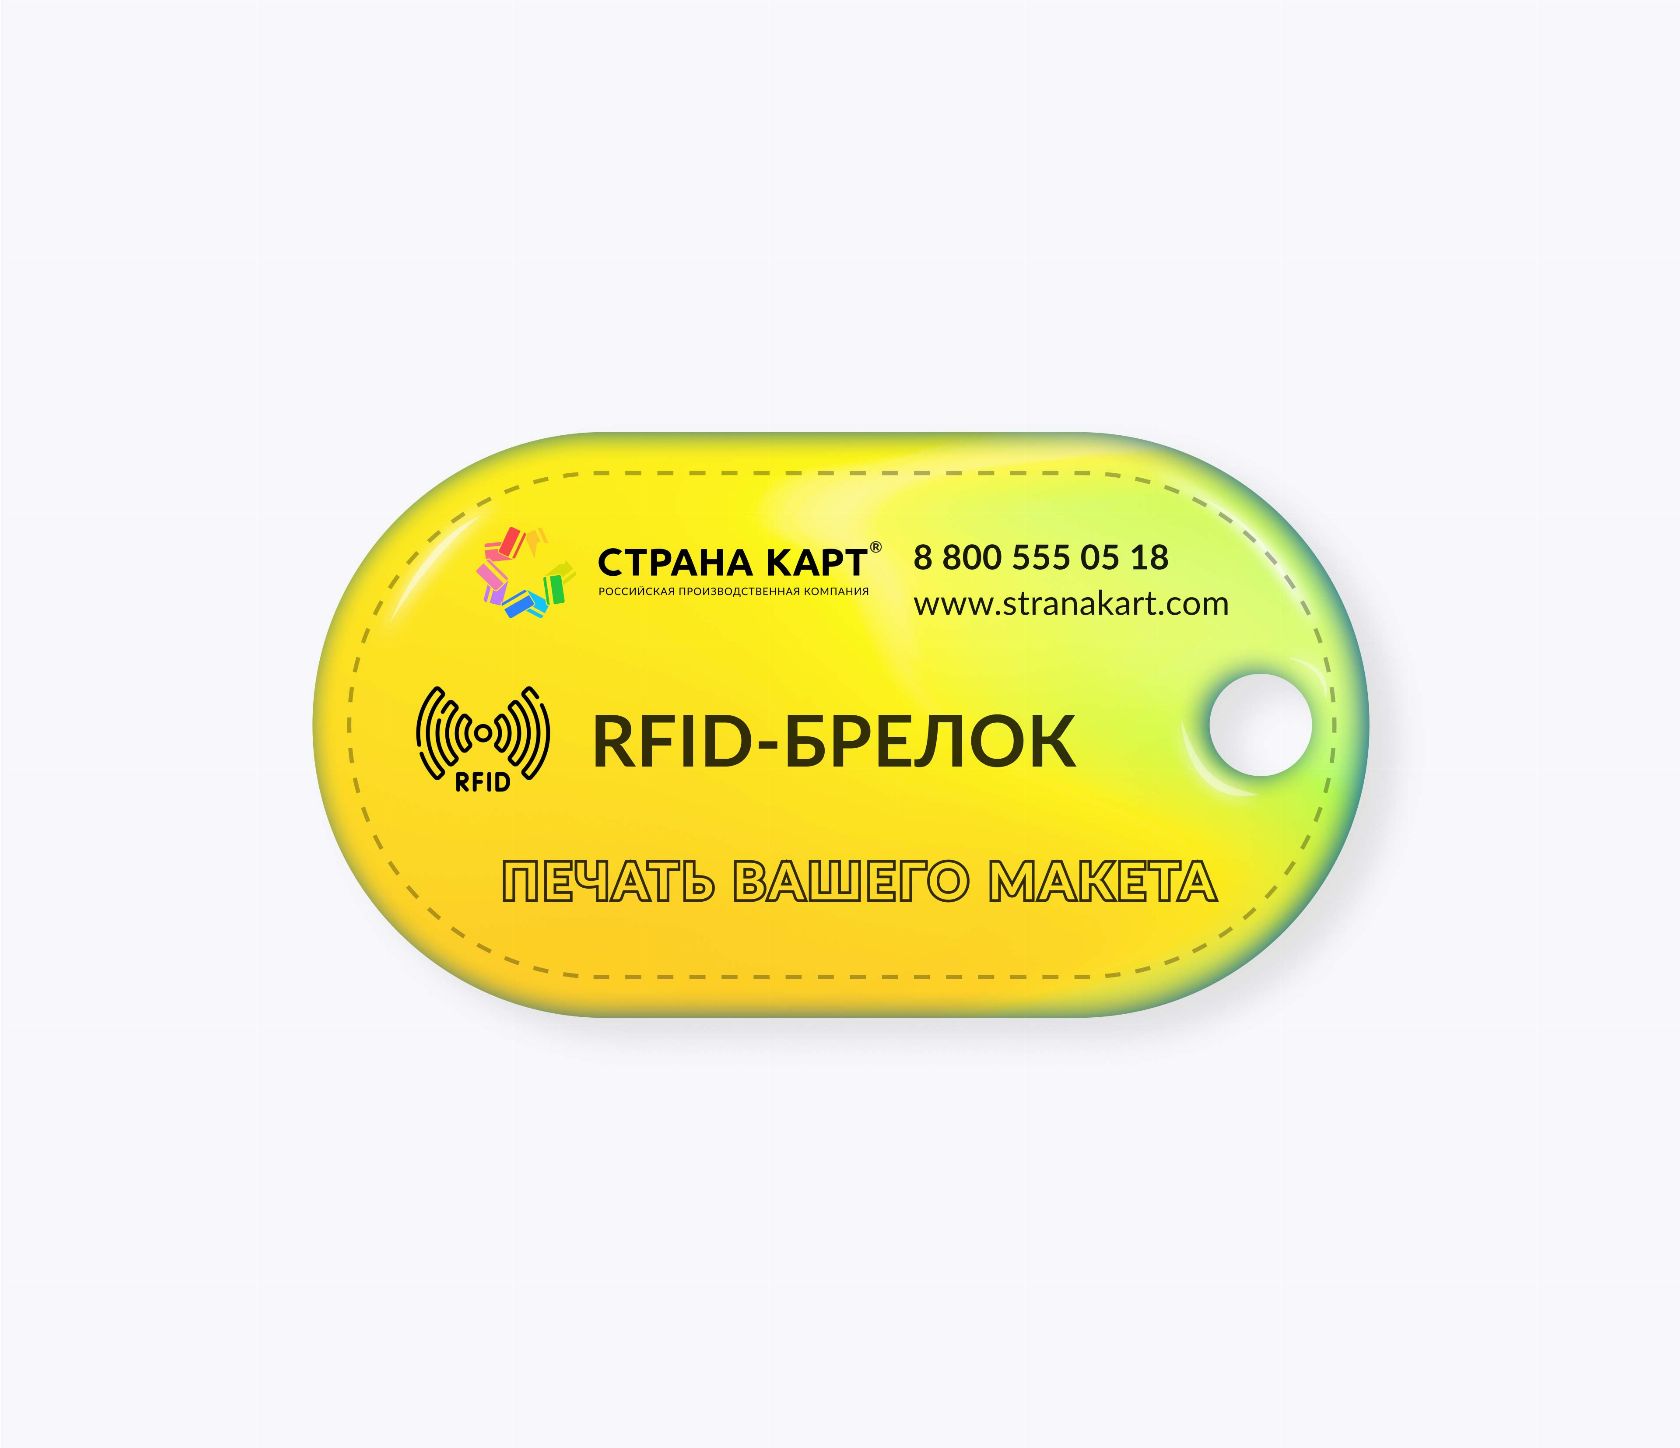 Овальные RFID-брелоки NEOKEY® с чипом NXP MIFARE Classic 1k 7 byte UID RFID-брелоки NEOKEY® с чипом NXP MIFARE Classic 1k 7 byte UID и вашим логотипом